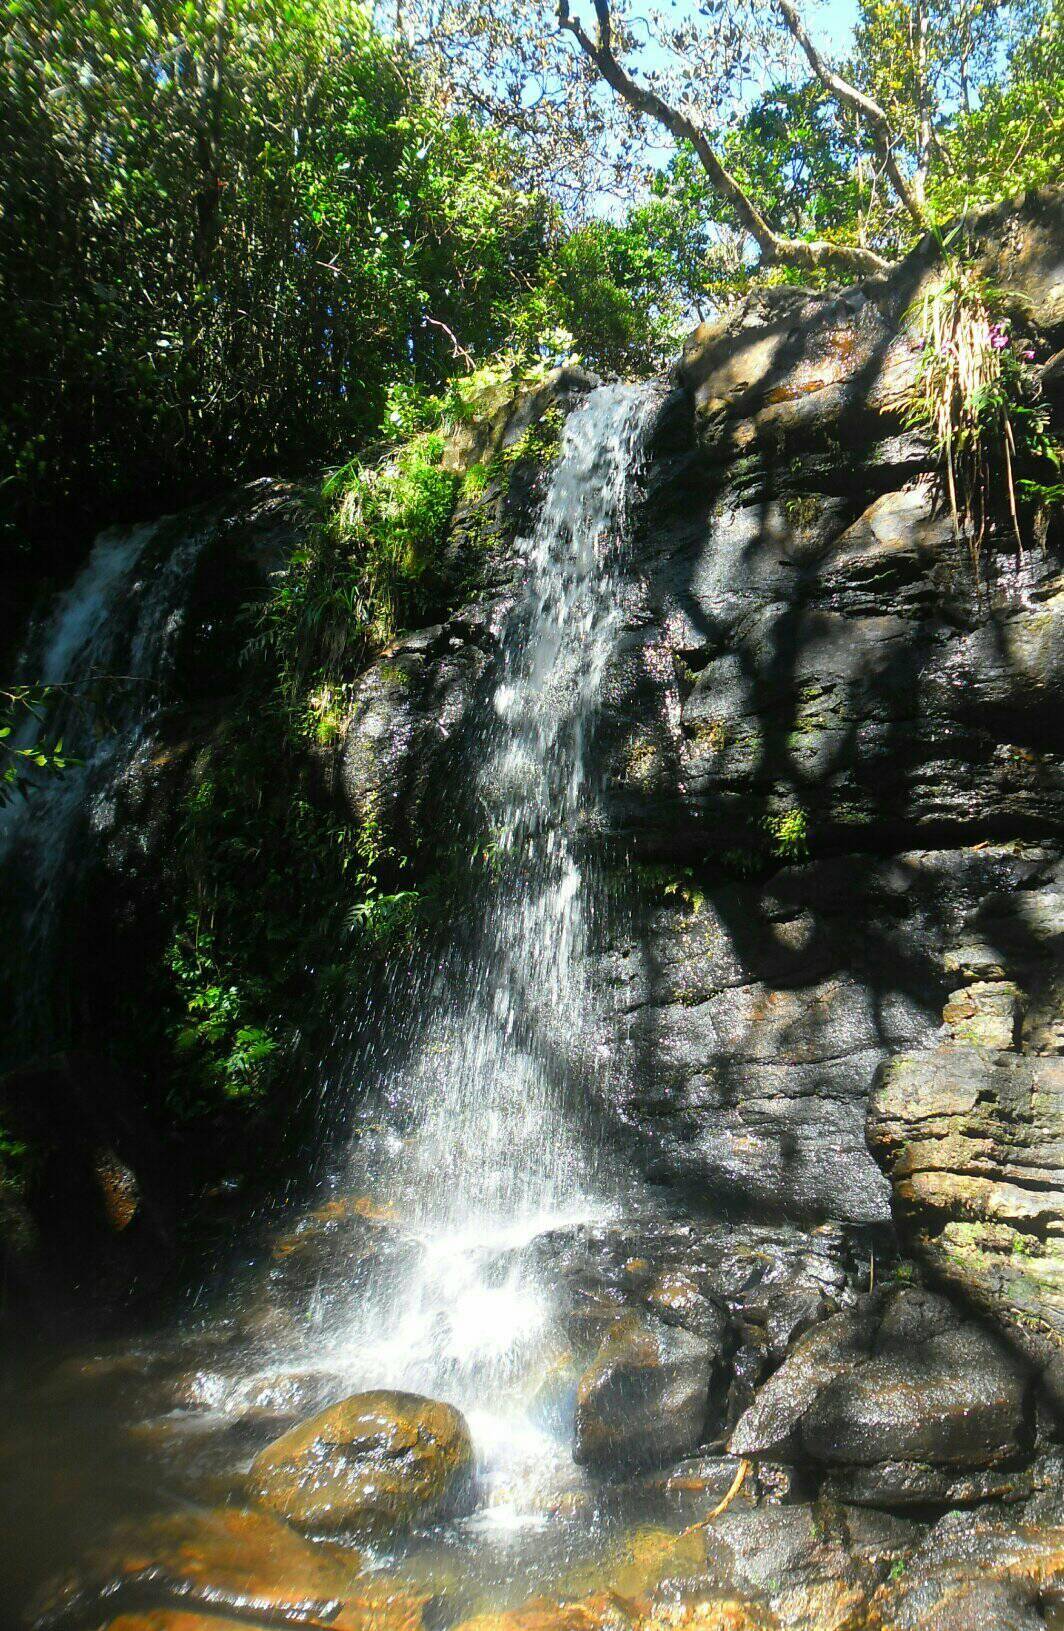 Find the Battalu Oya waterfall hidden in the Siripa forest reserve